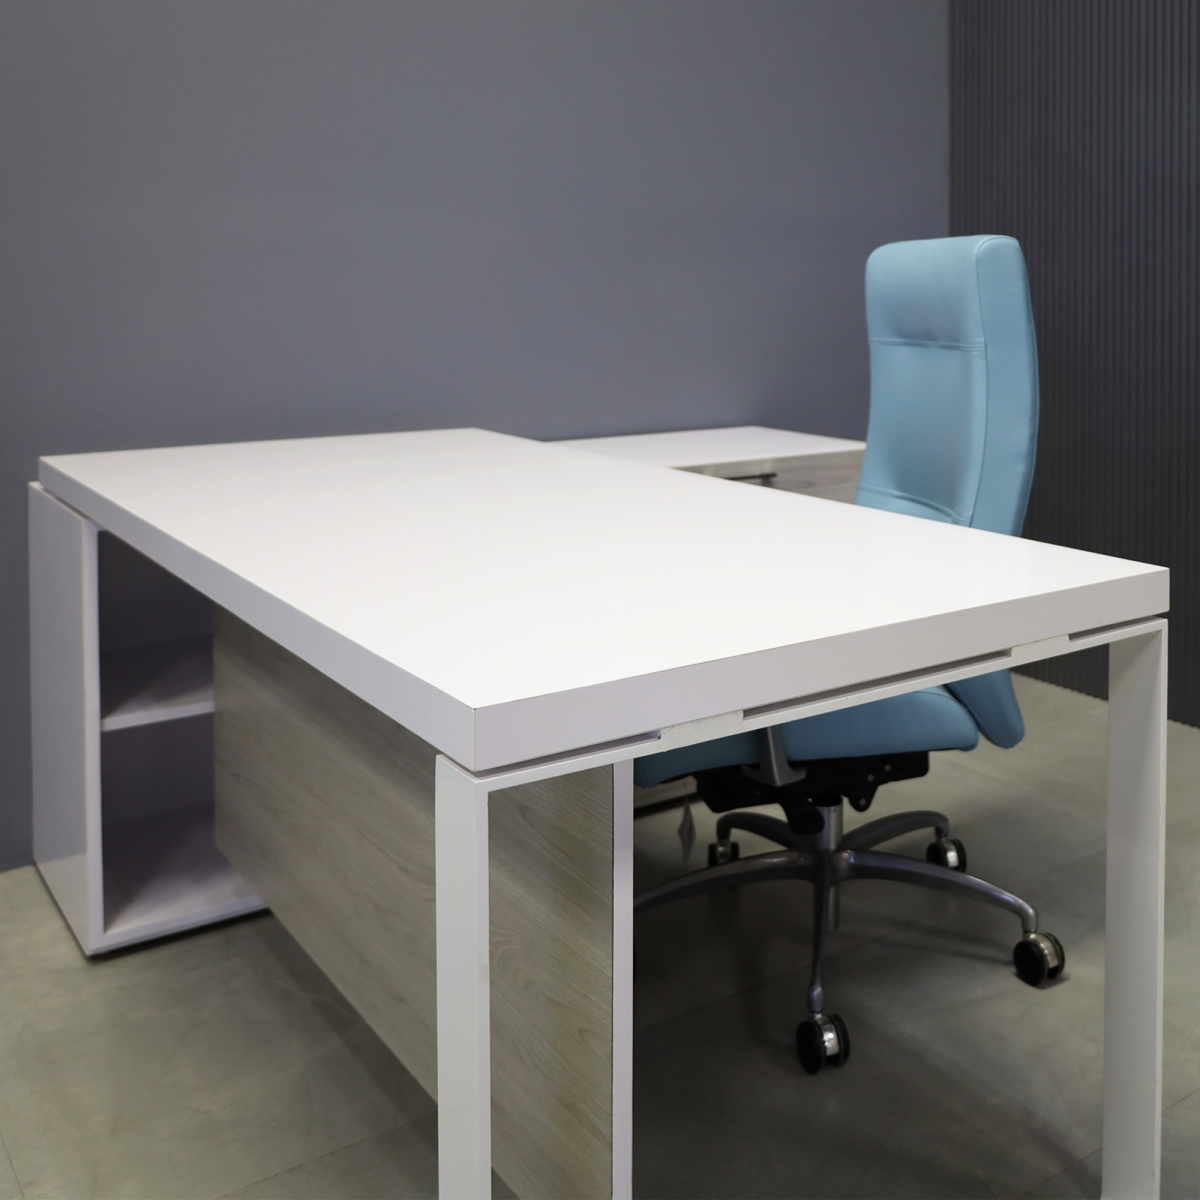 Aspen Executive Desk With Credenza in White Gloss Laminate Top - 72 In. - Stock #22